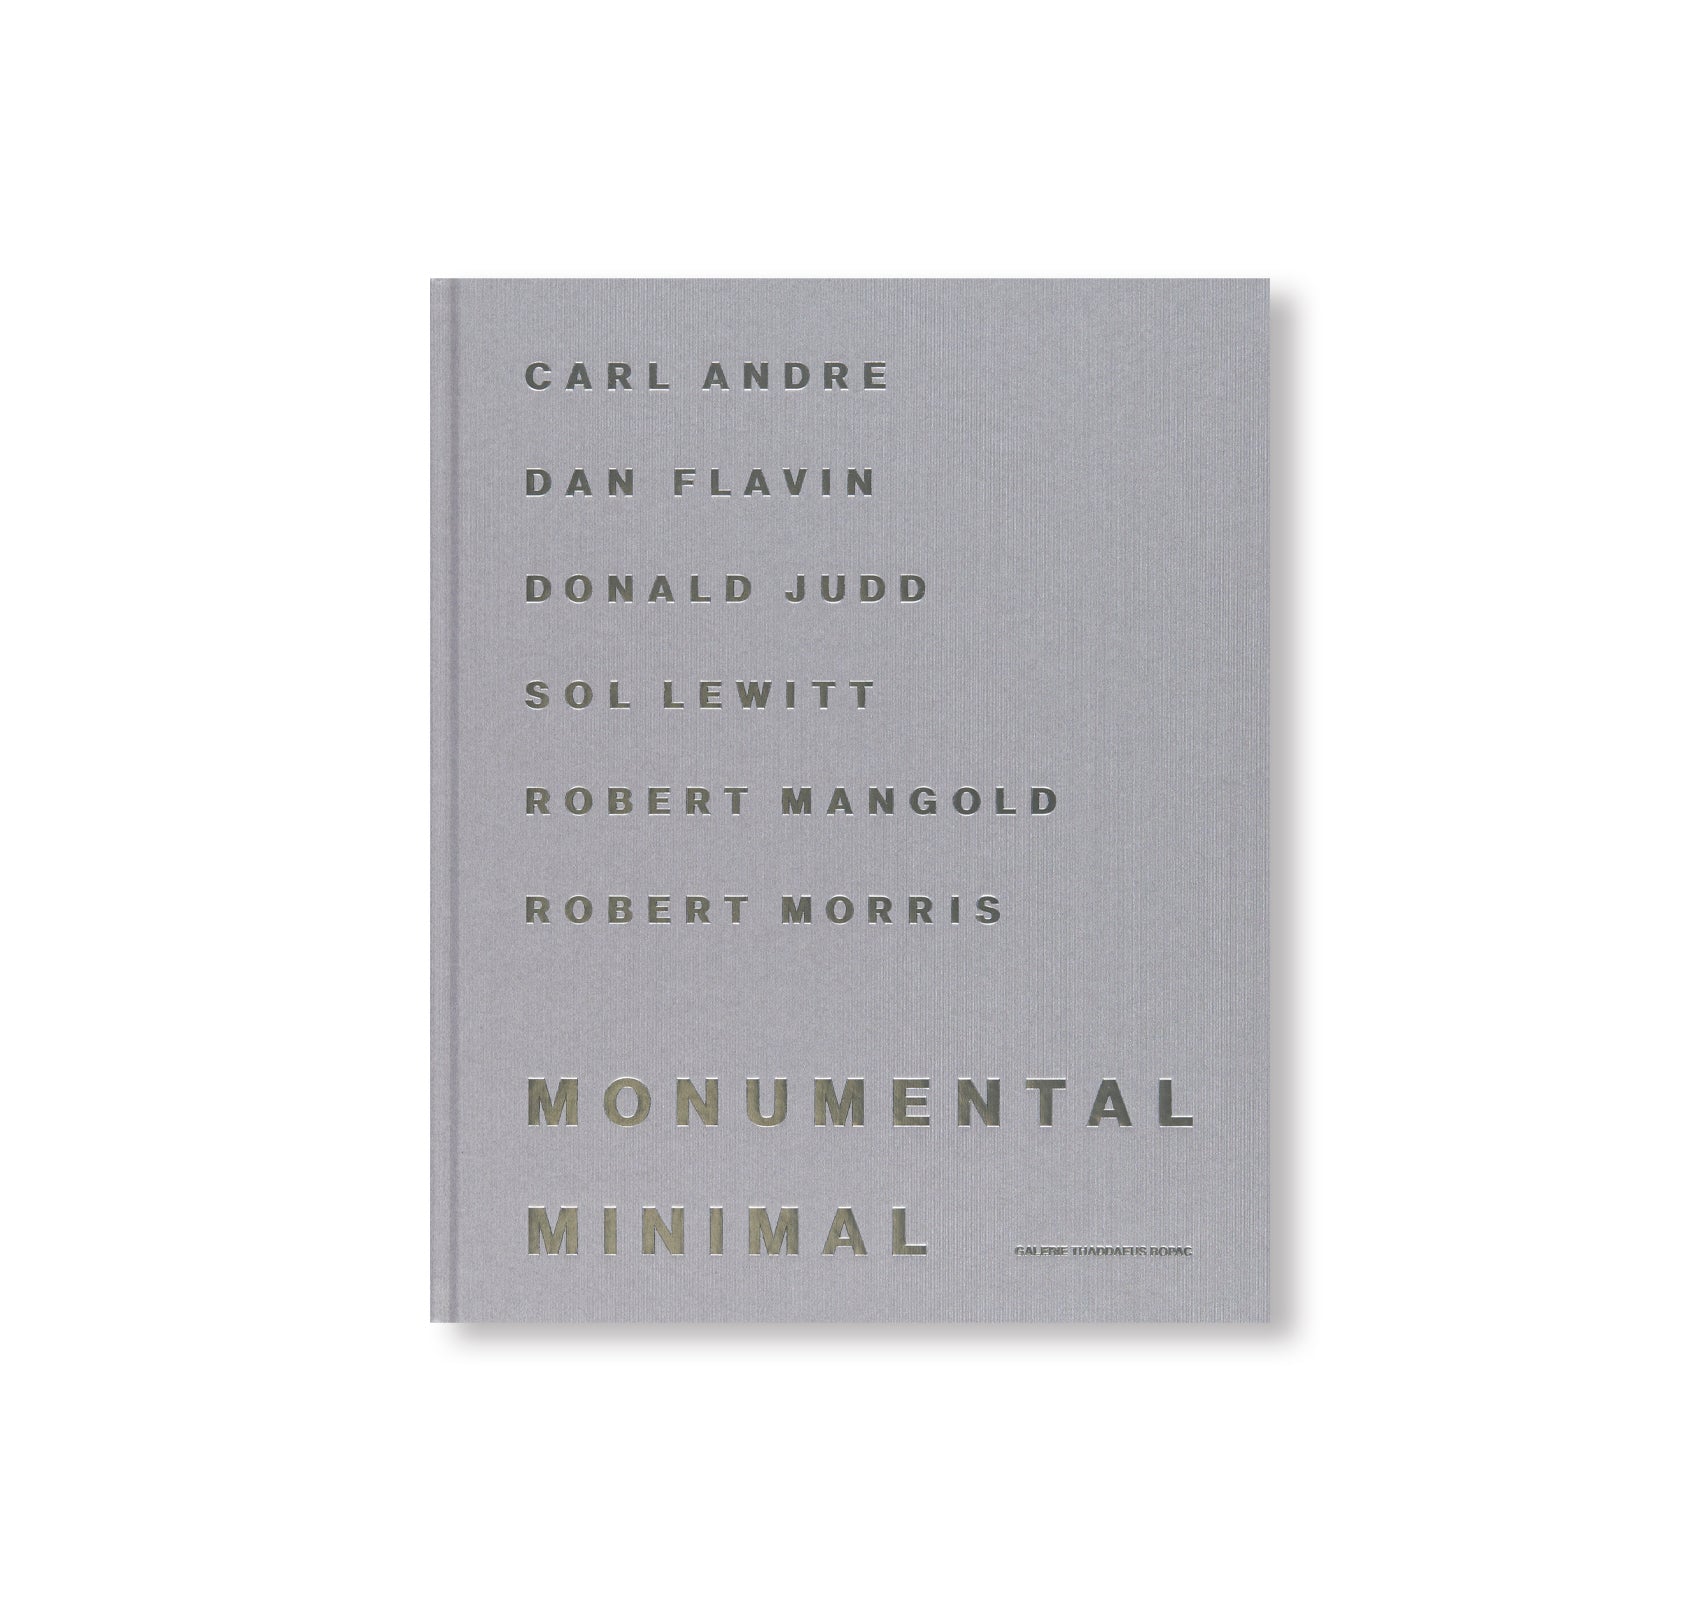 MONUMENTAL MINIMAL by Carl Andre, Dan Flavin, Donald Judd, Sol Lewitt, Robert Mangold, Robert Morris